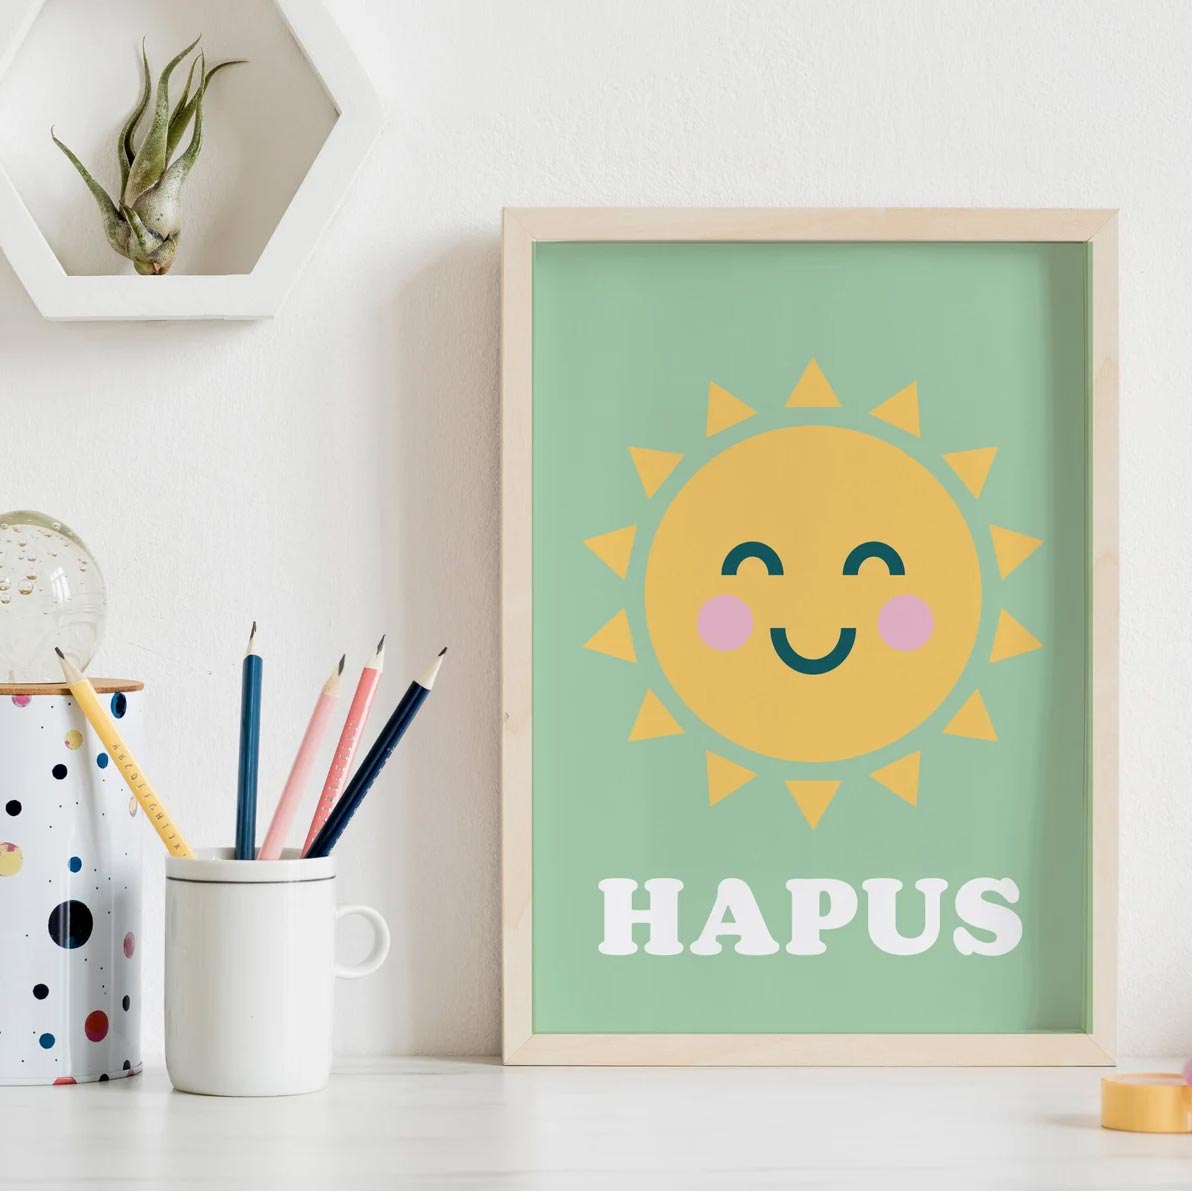 Print - Smiling Sun - Happy / Hapus - A4